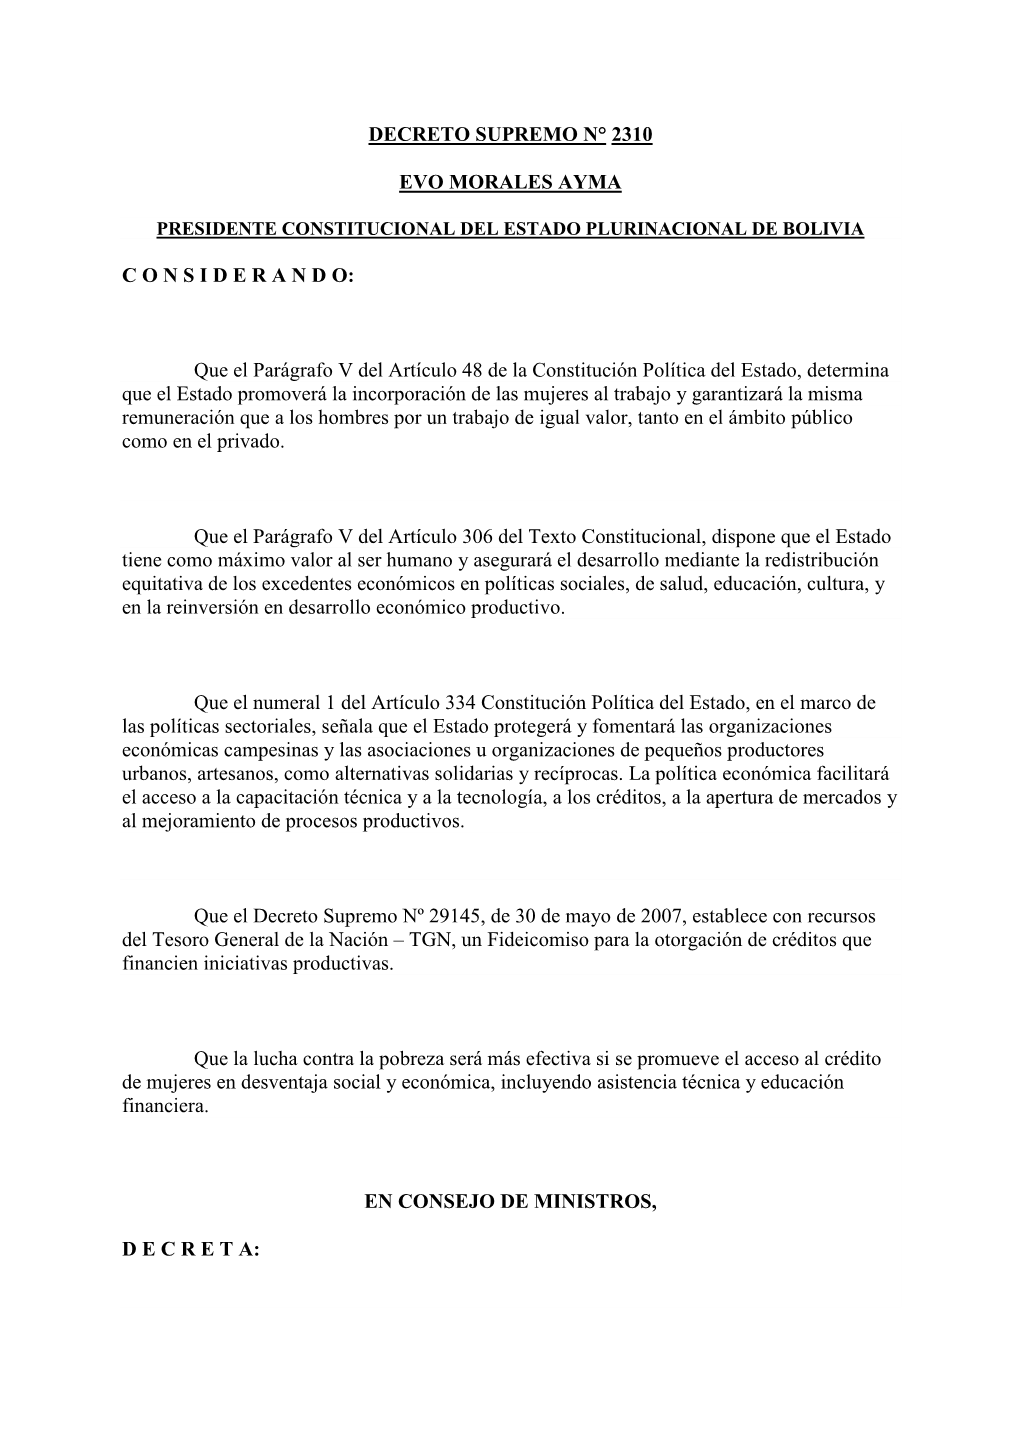 Decreto Supremo N° 2310 Evo Morales Ayma